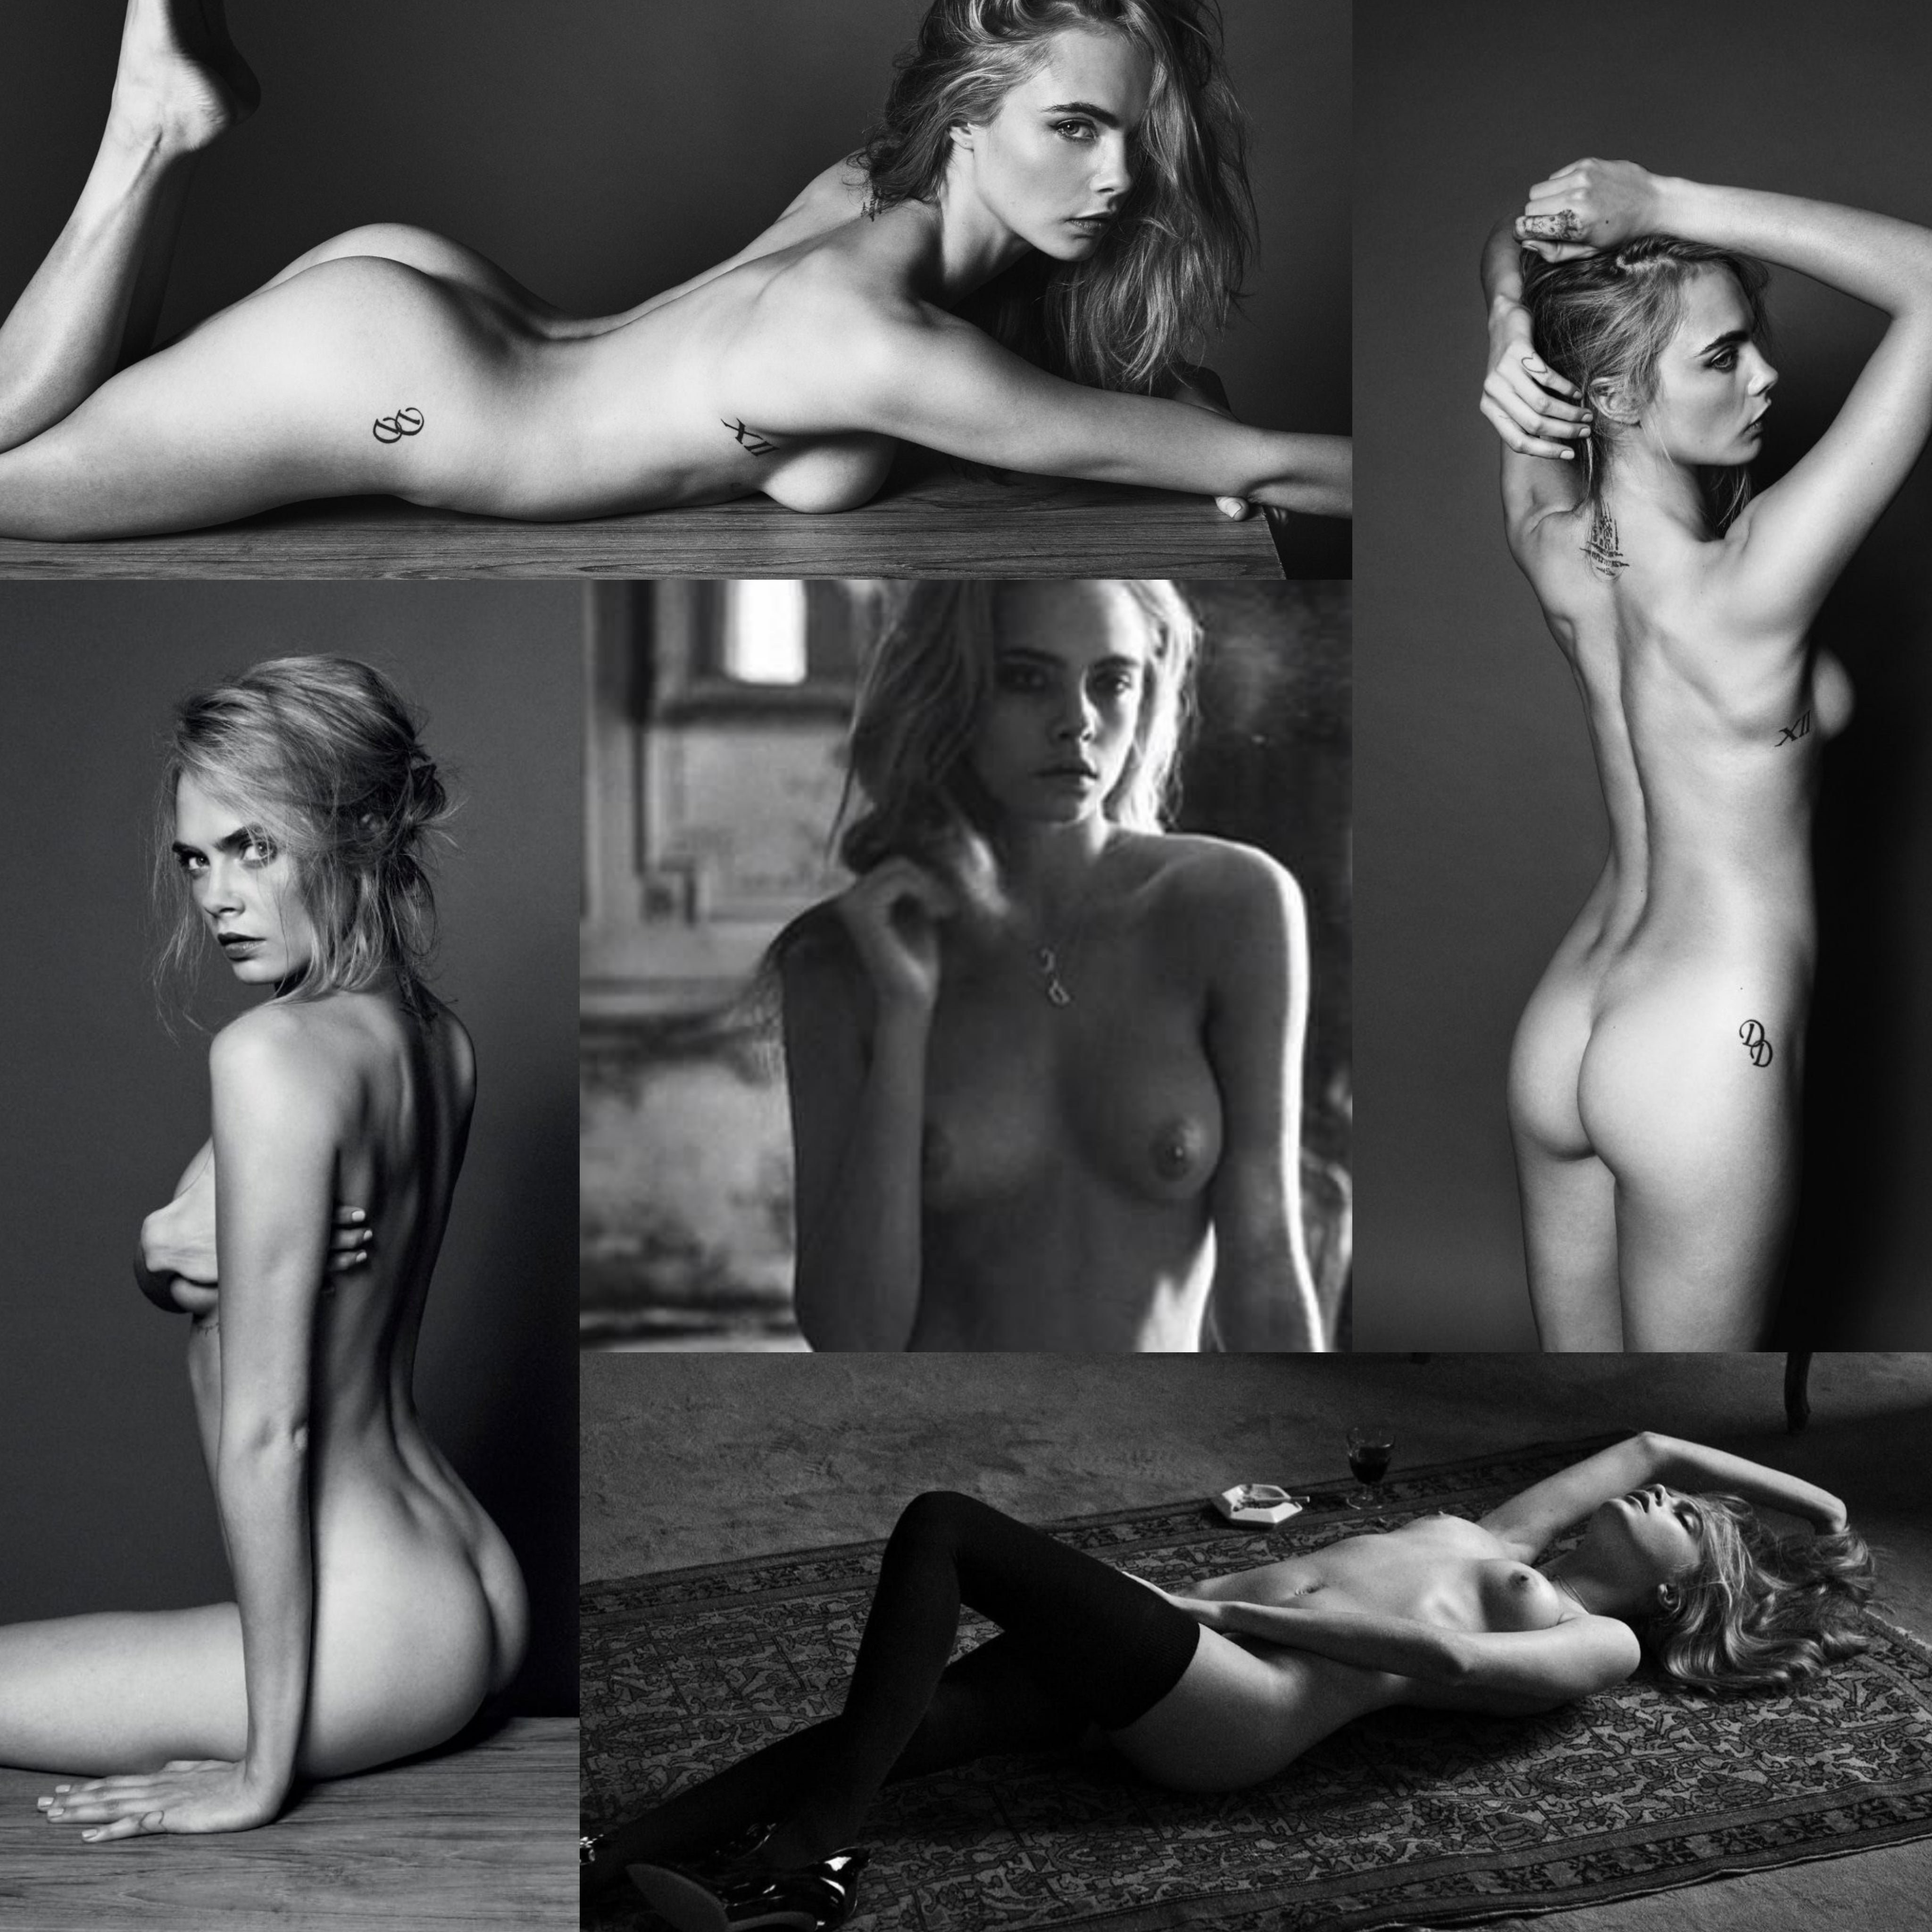 Cara delevingne leaked nude photos